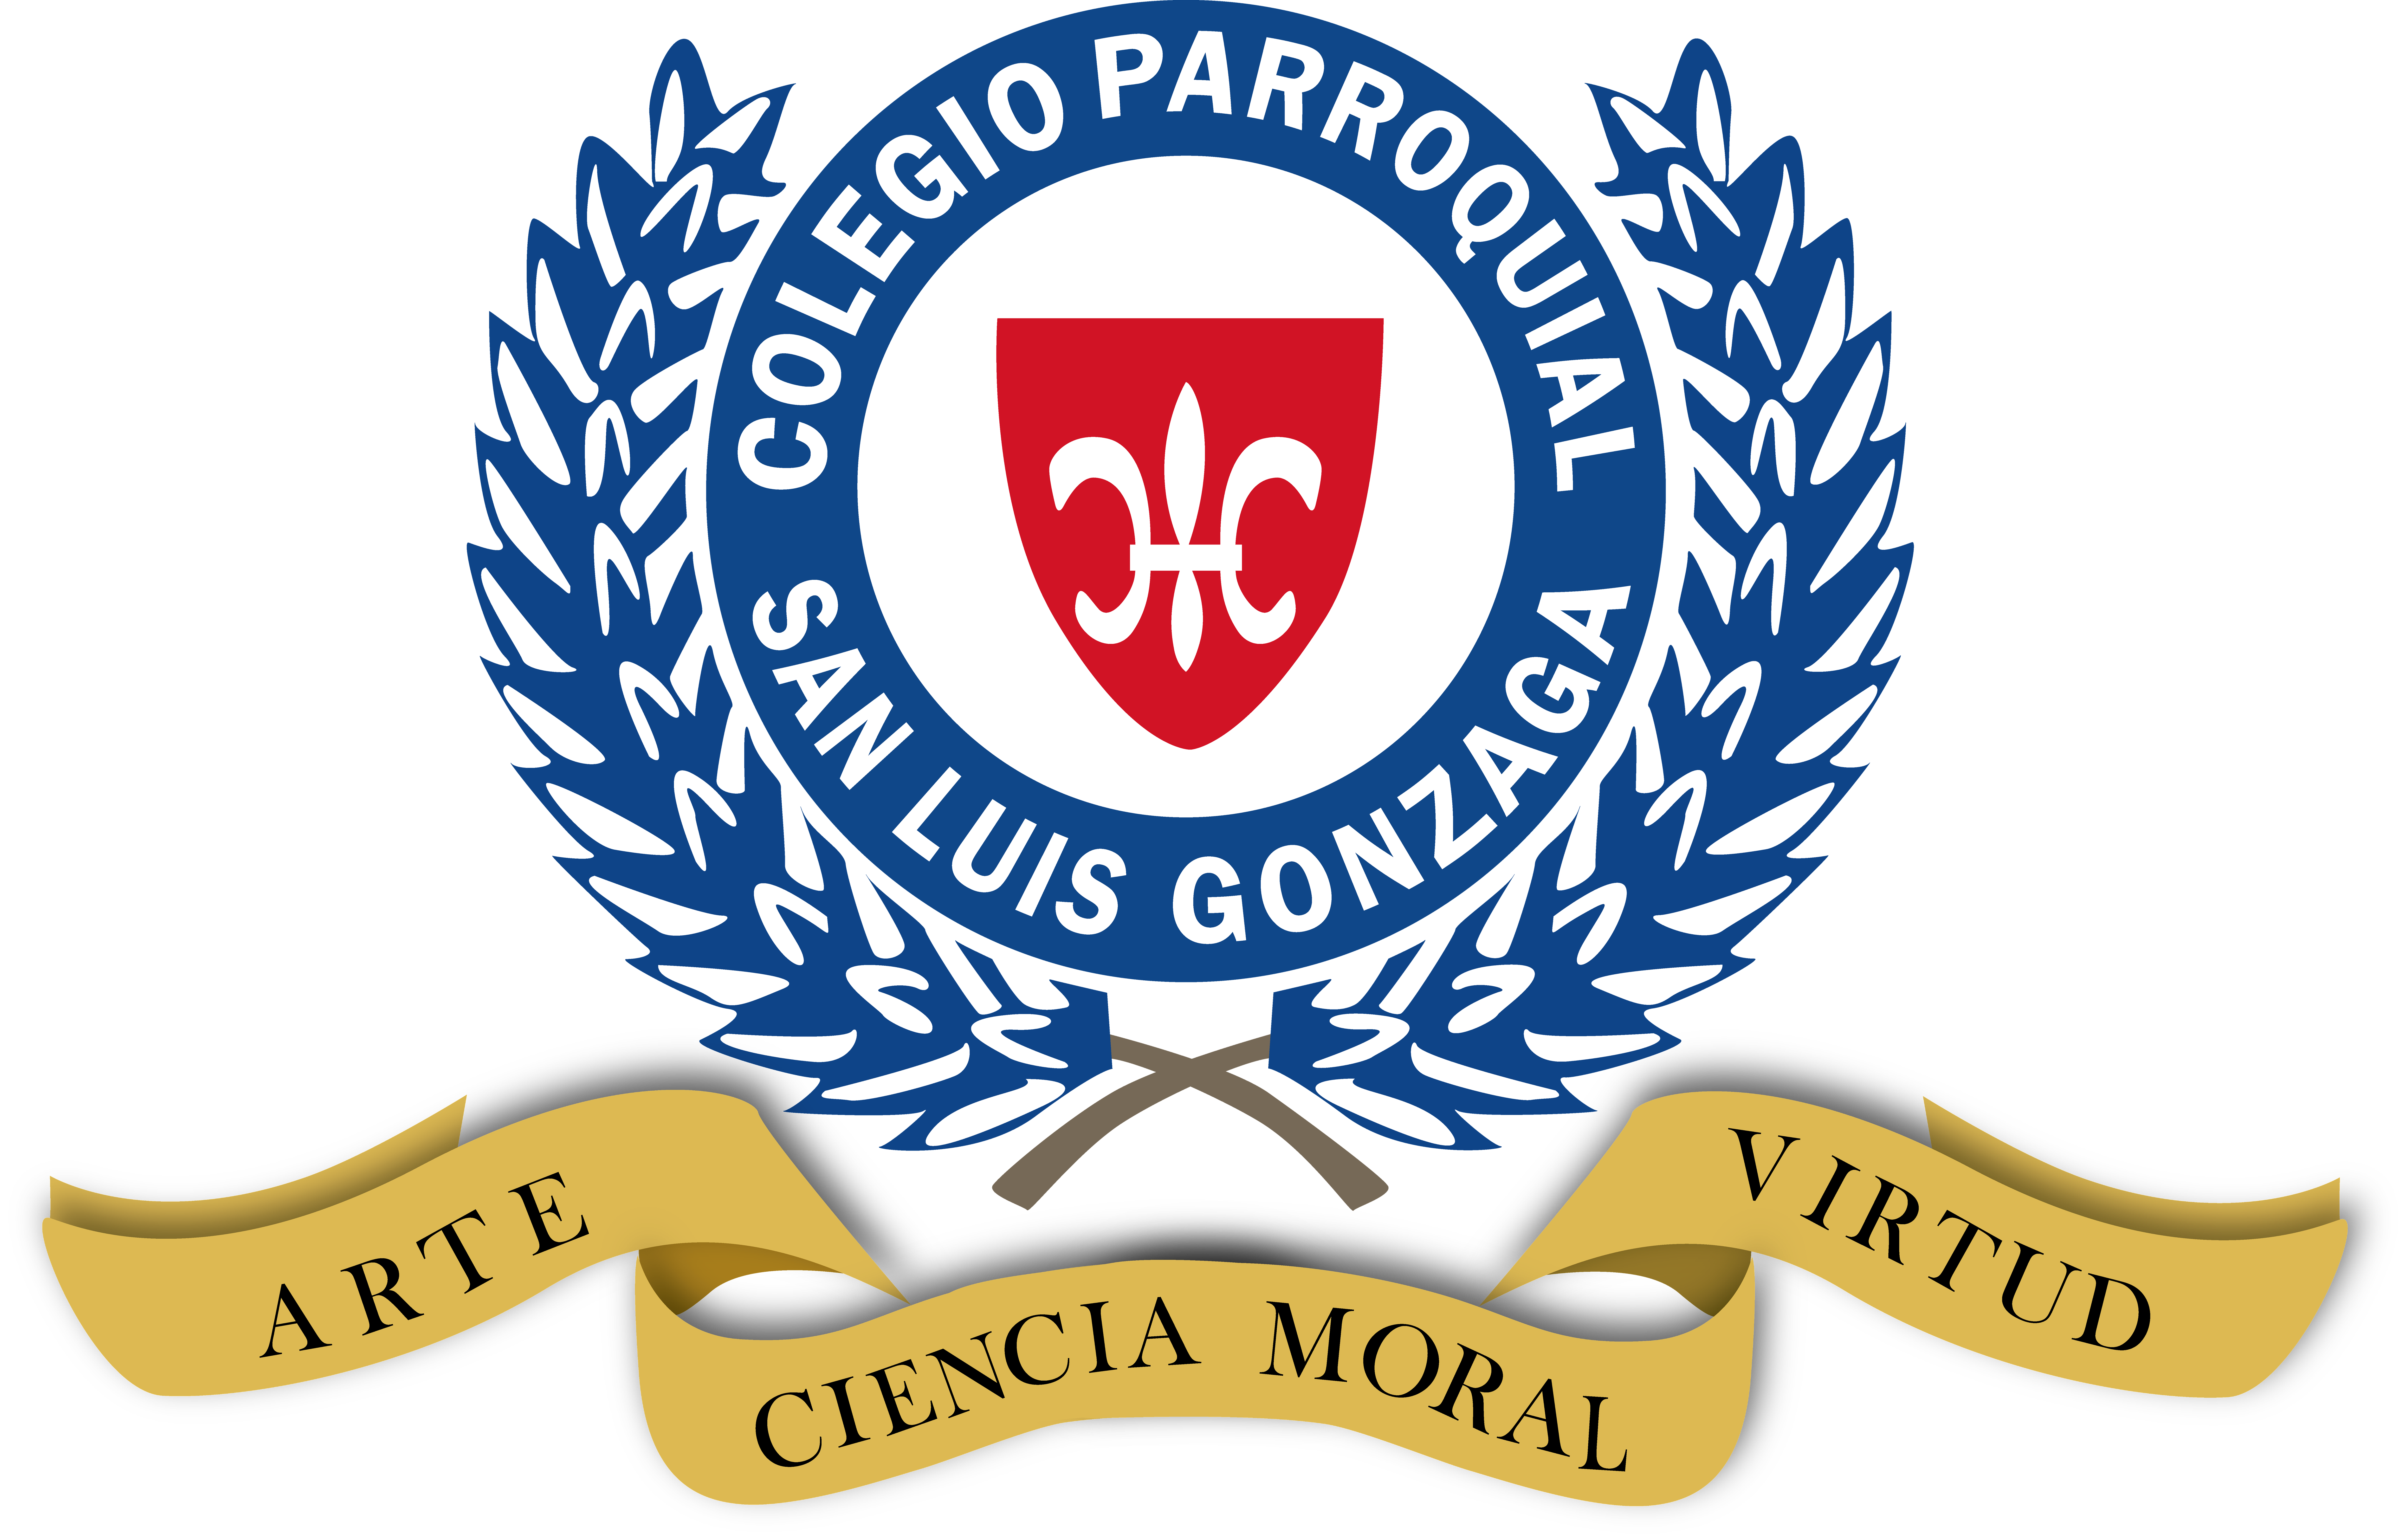 Colegio Parroquial San Luis Gonzaga